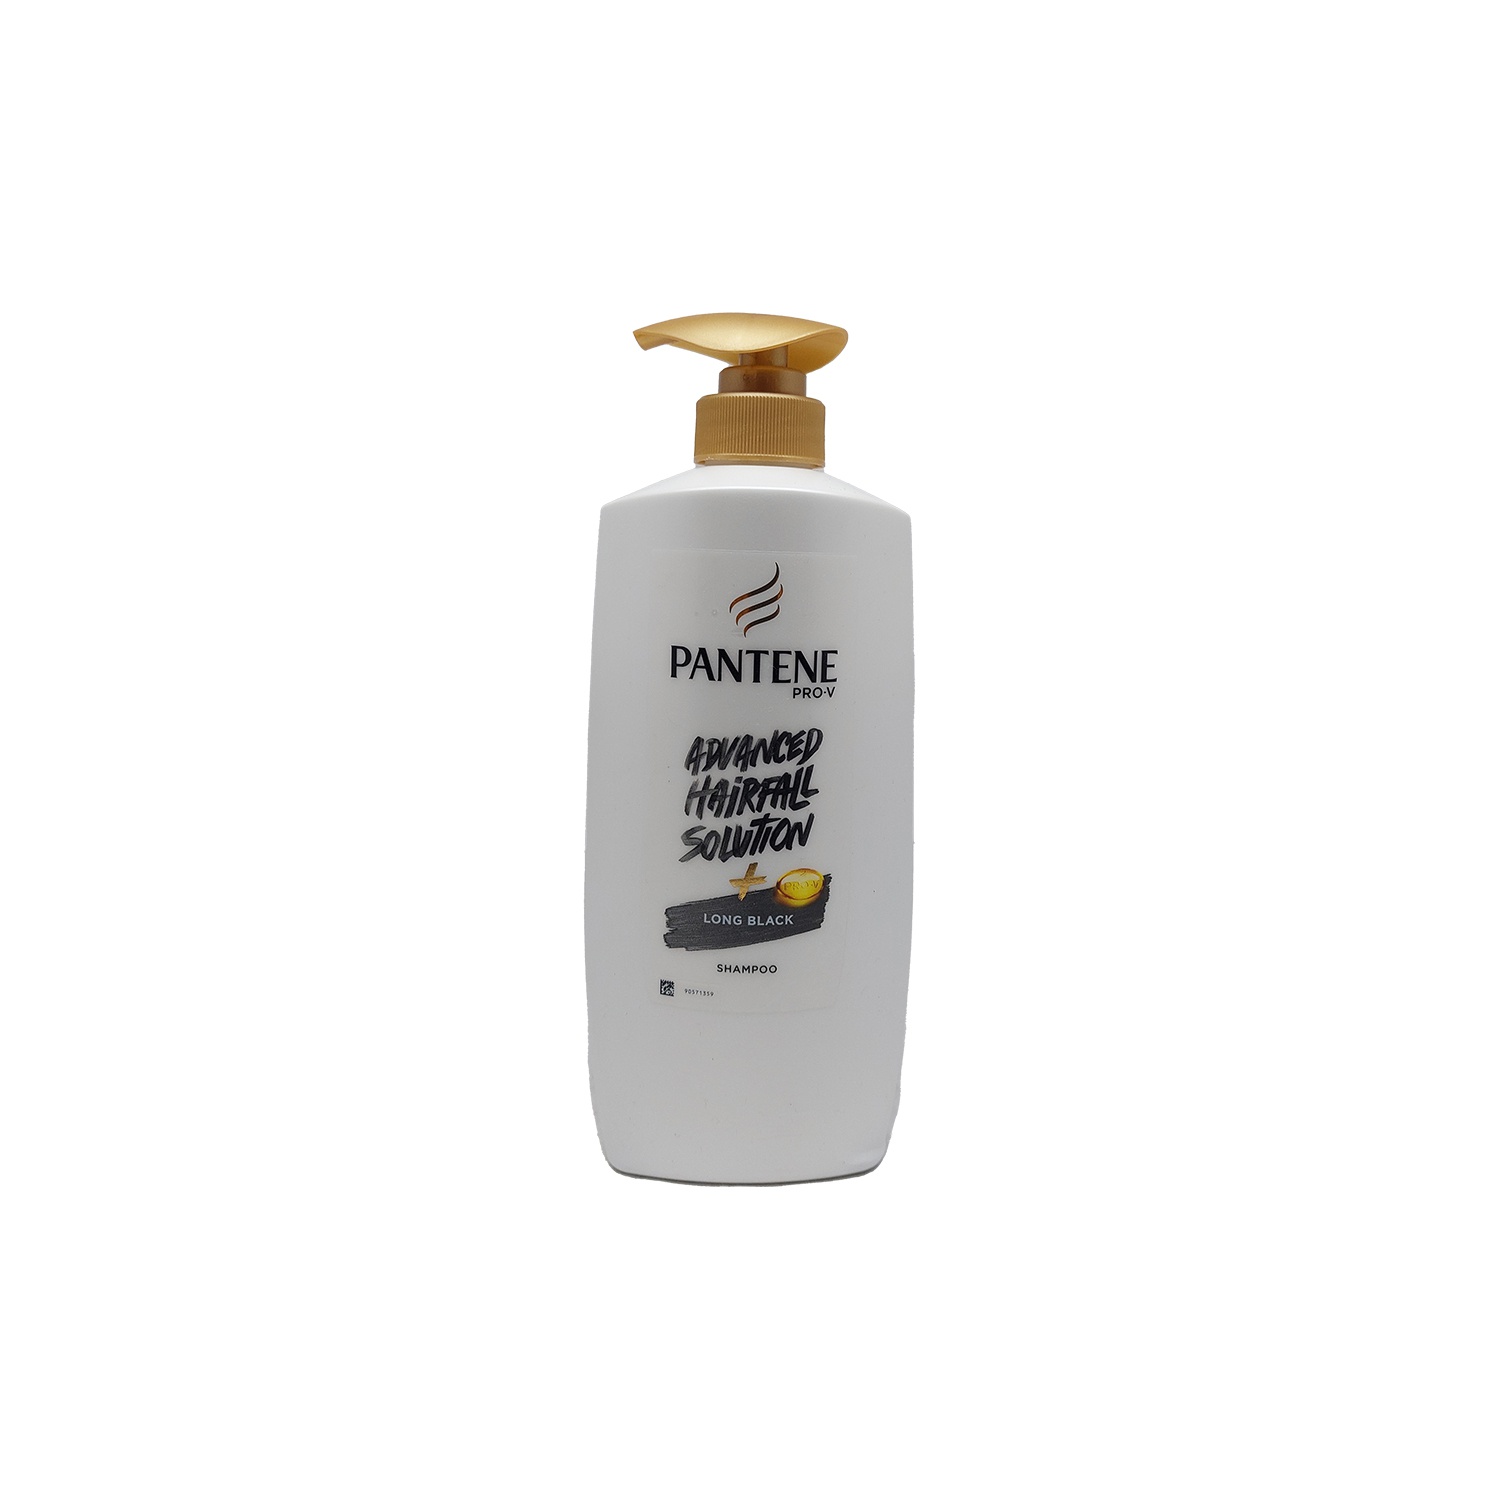 Pantene Shampoo Long Black 650Ml - PANTENE - Hair Care - in Sri Lanka